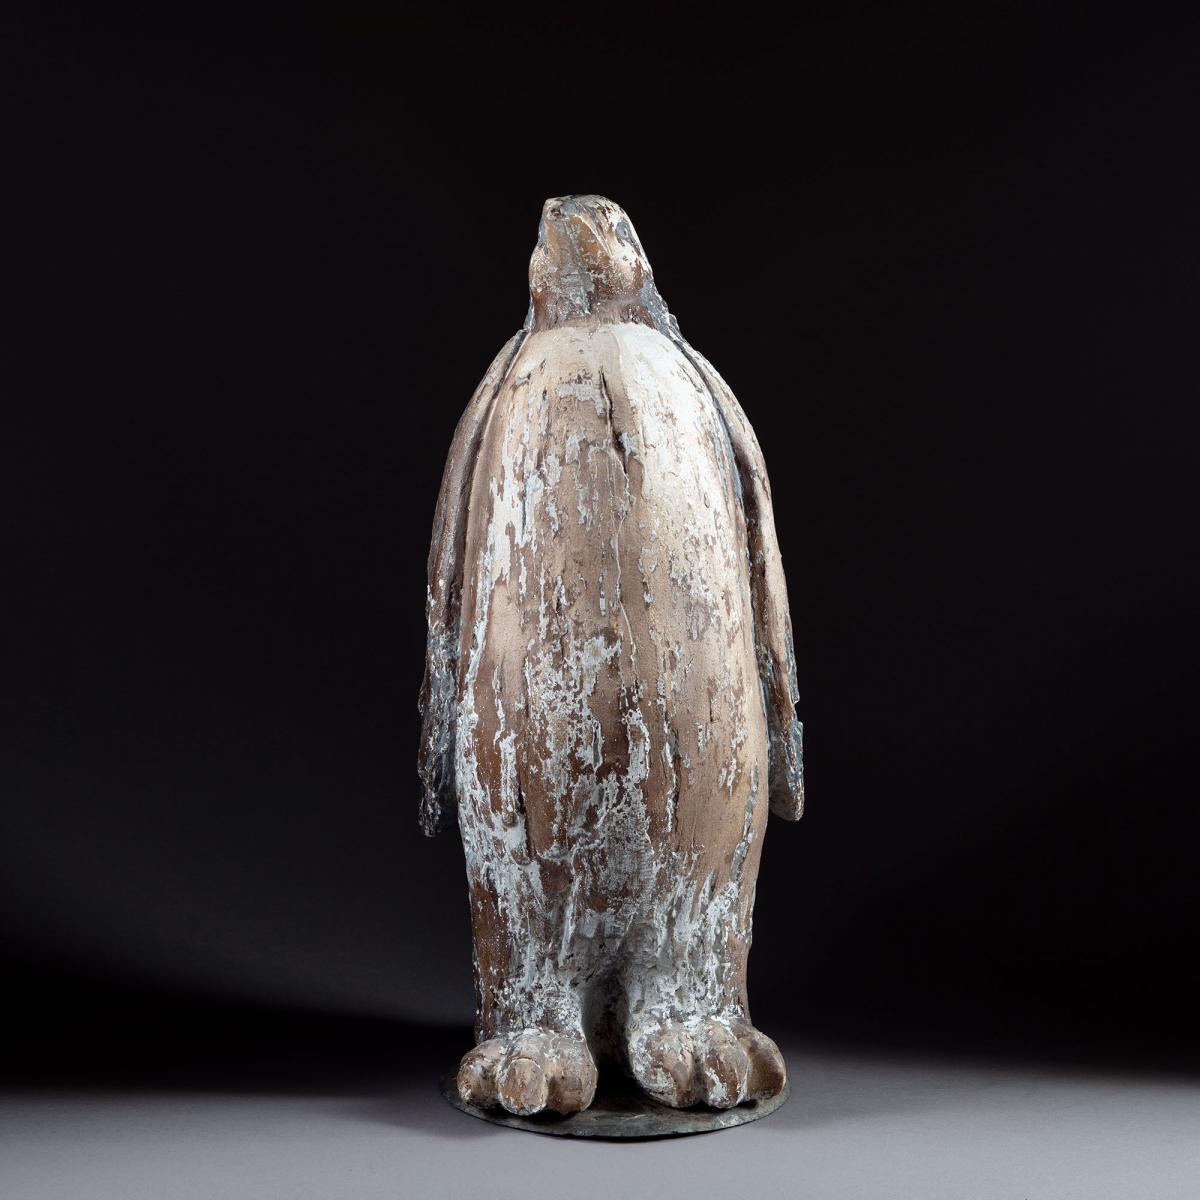 An Unusual Plaster Sculpture of an Emperor Penguin